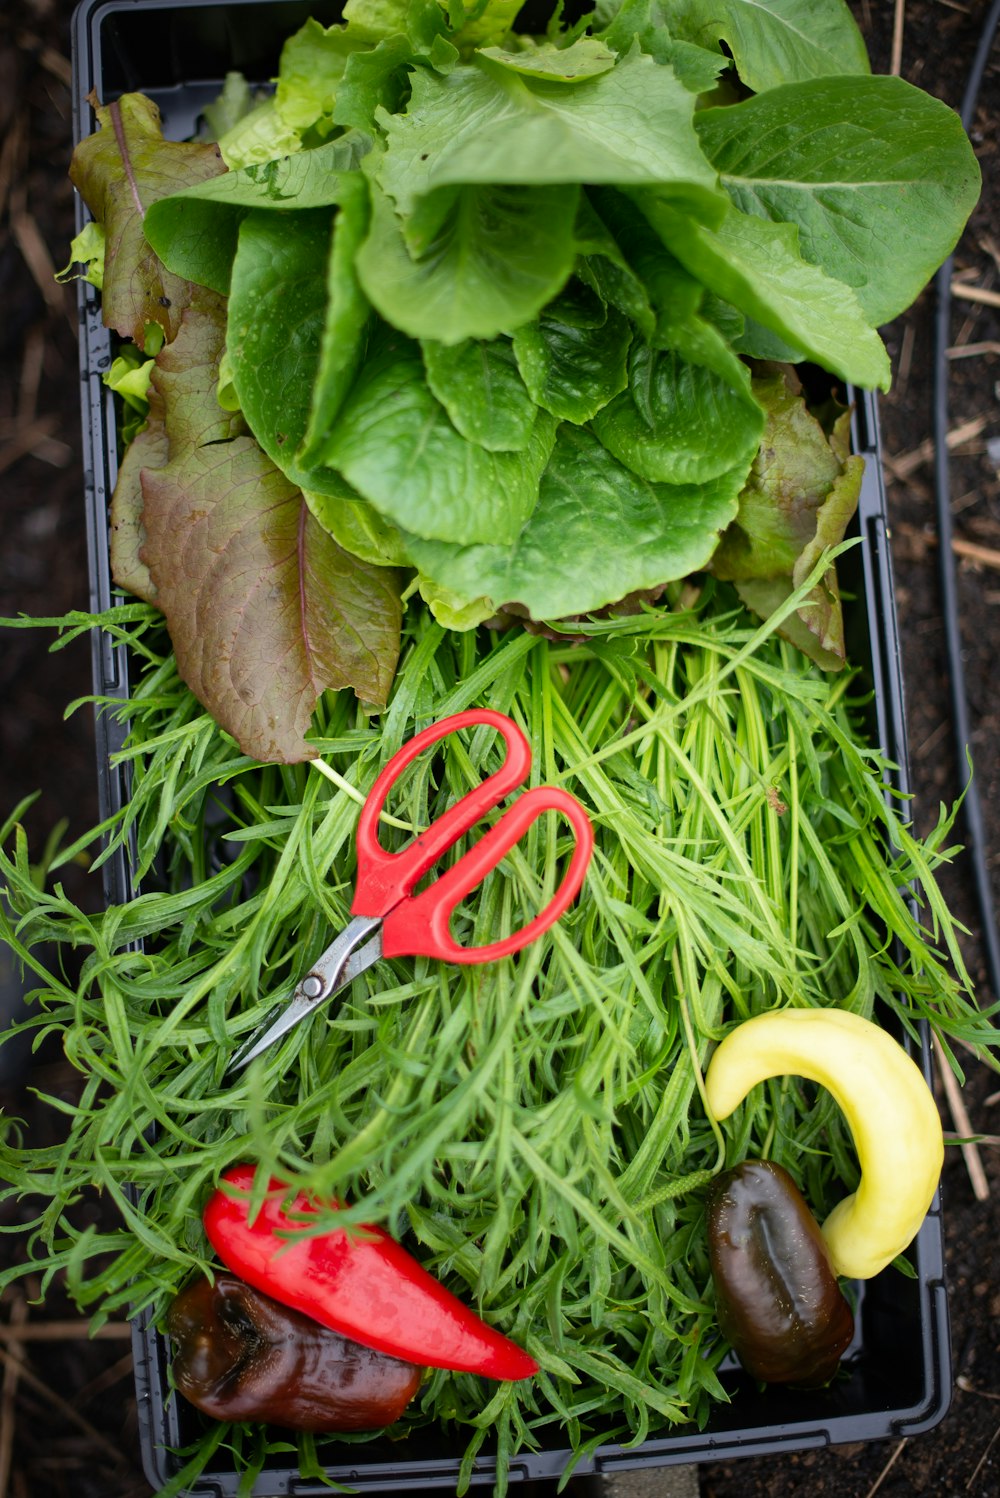 red handle scissors beside green vegetable